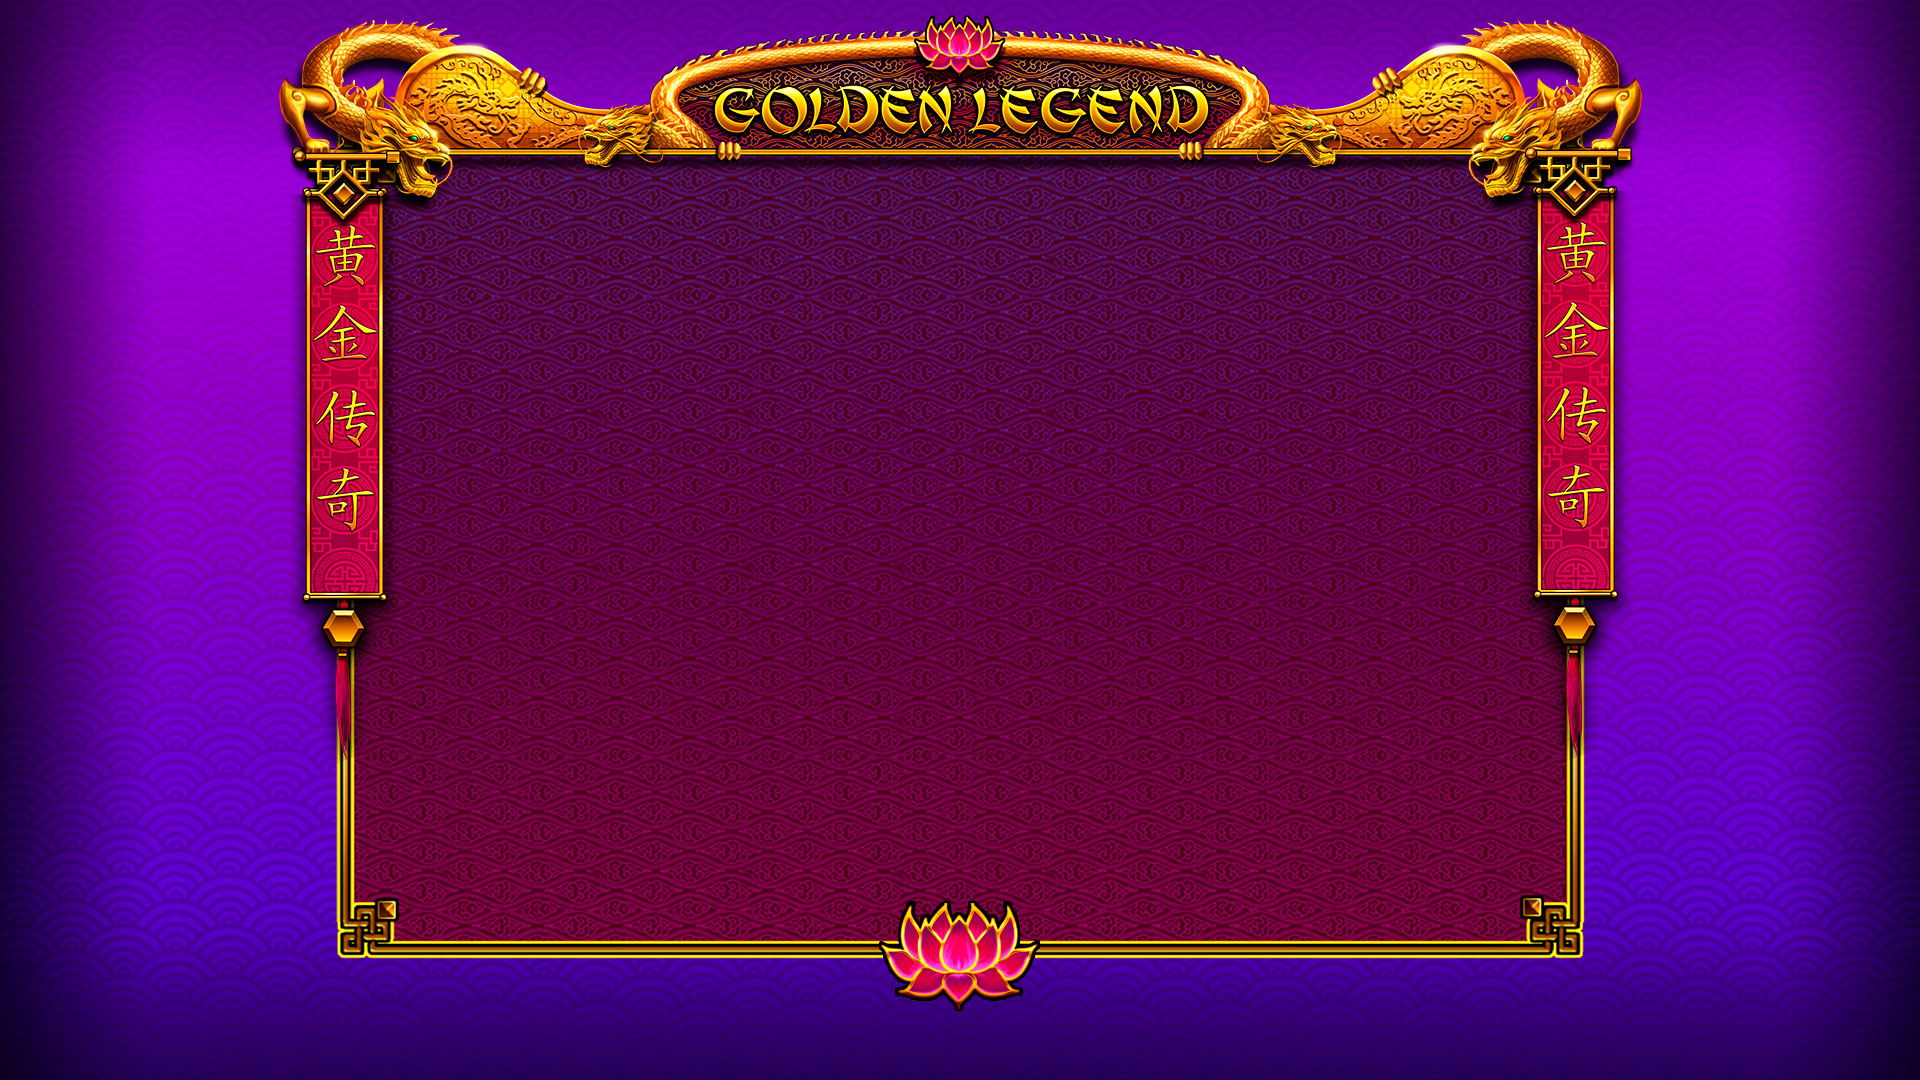 Game hight resolution background Golden Legend